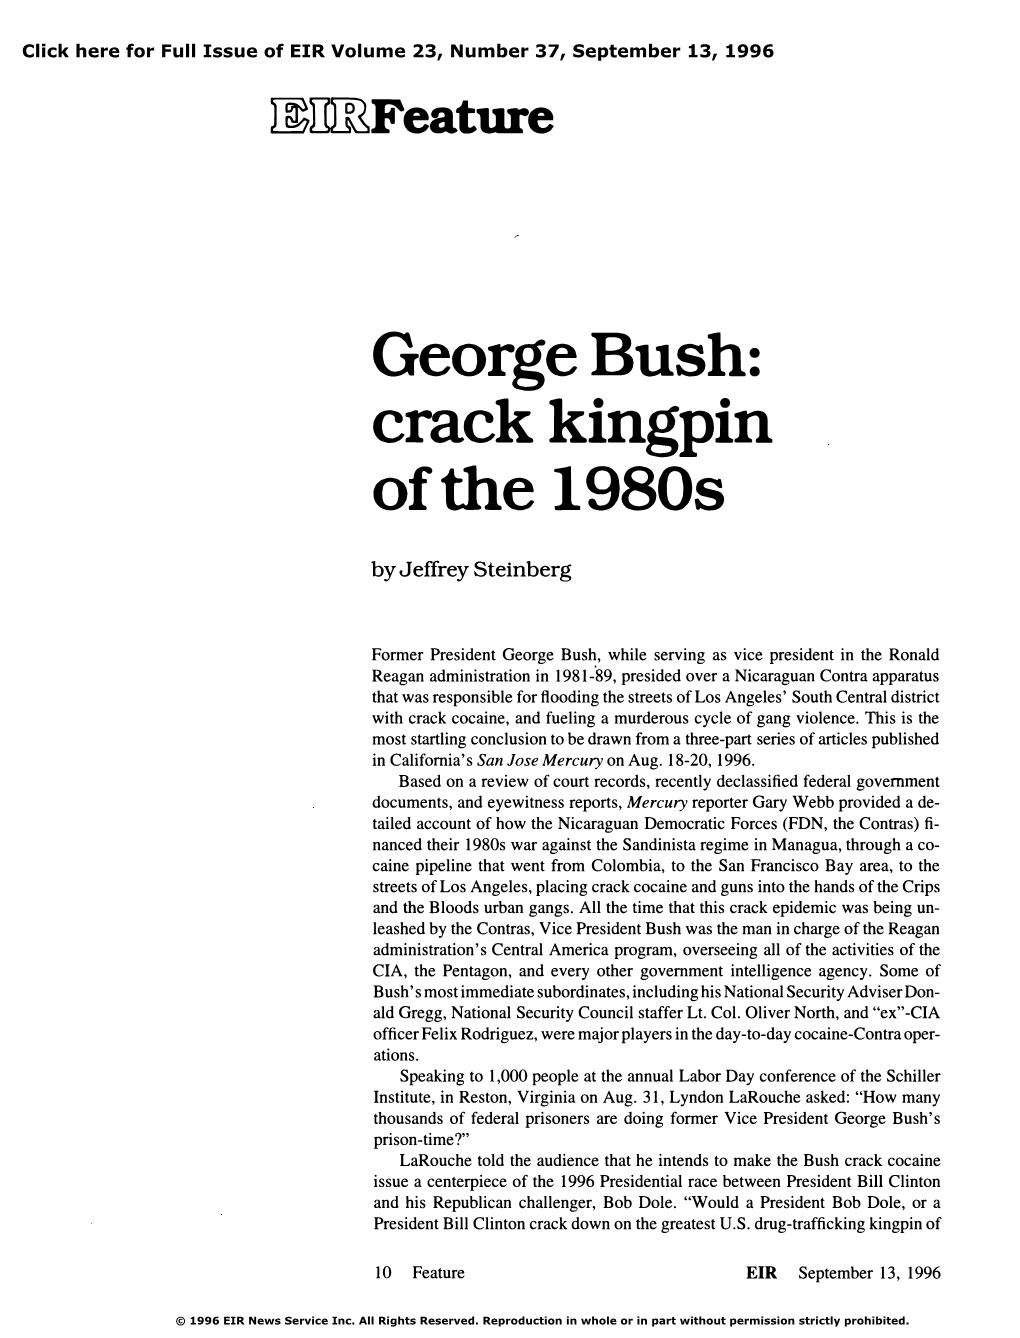 George Bush: Crack Kingpin of the 1980S